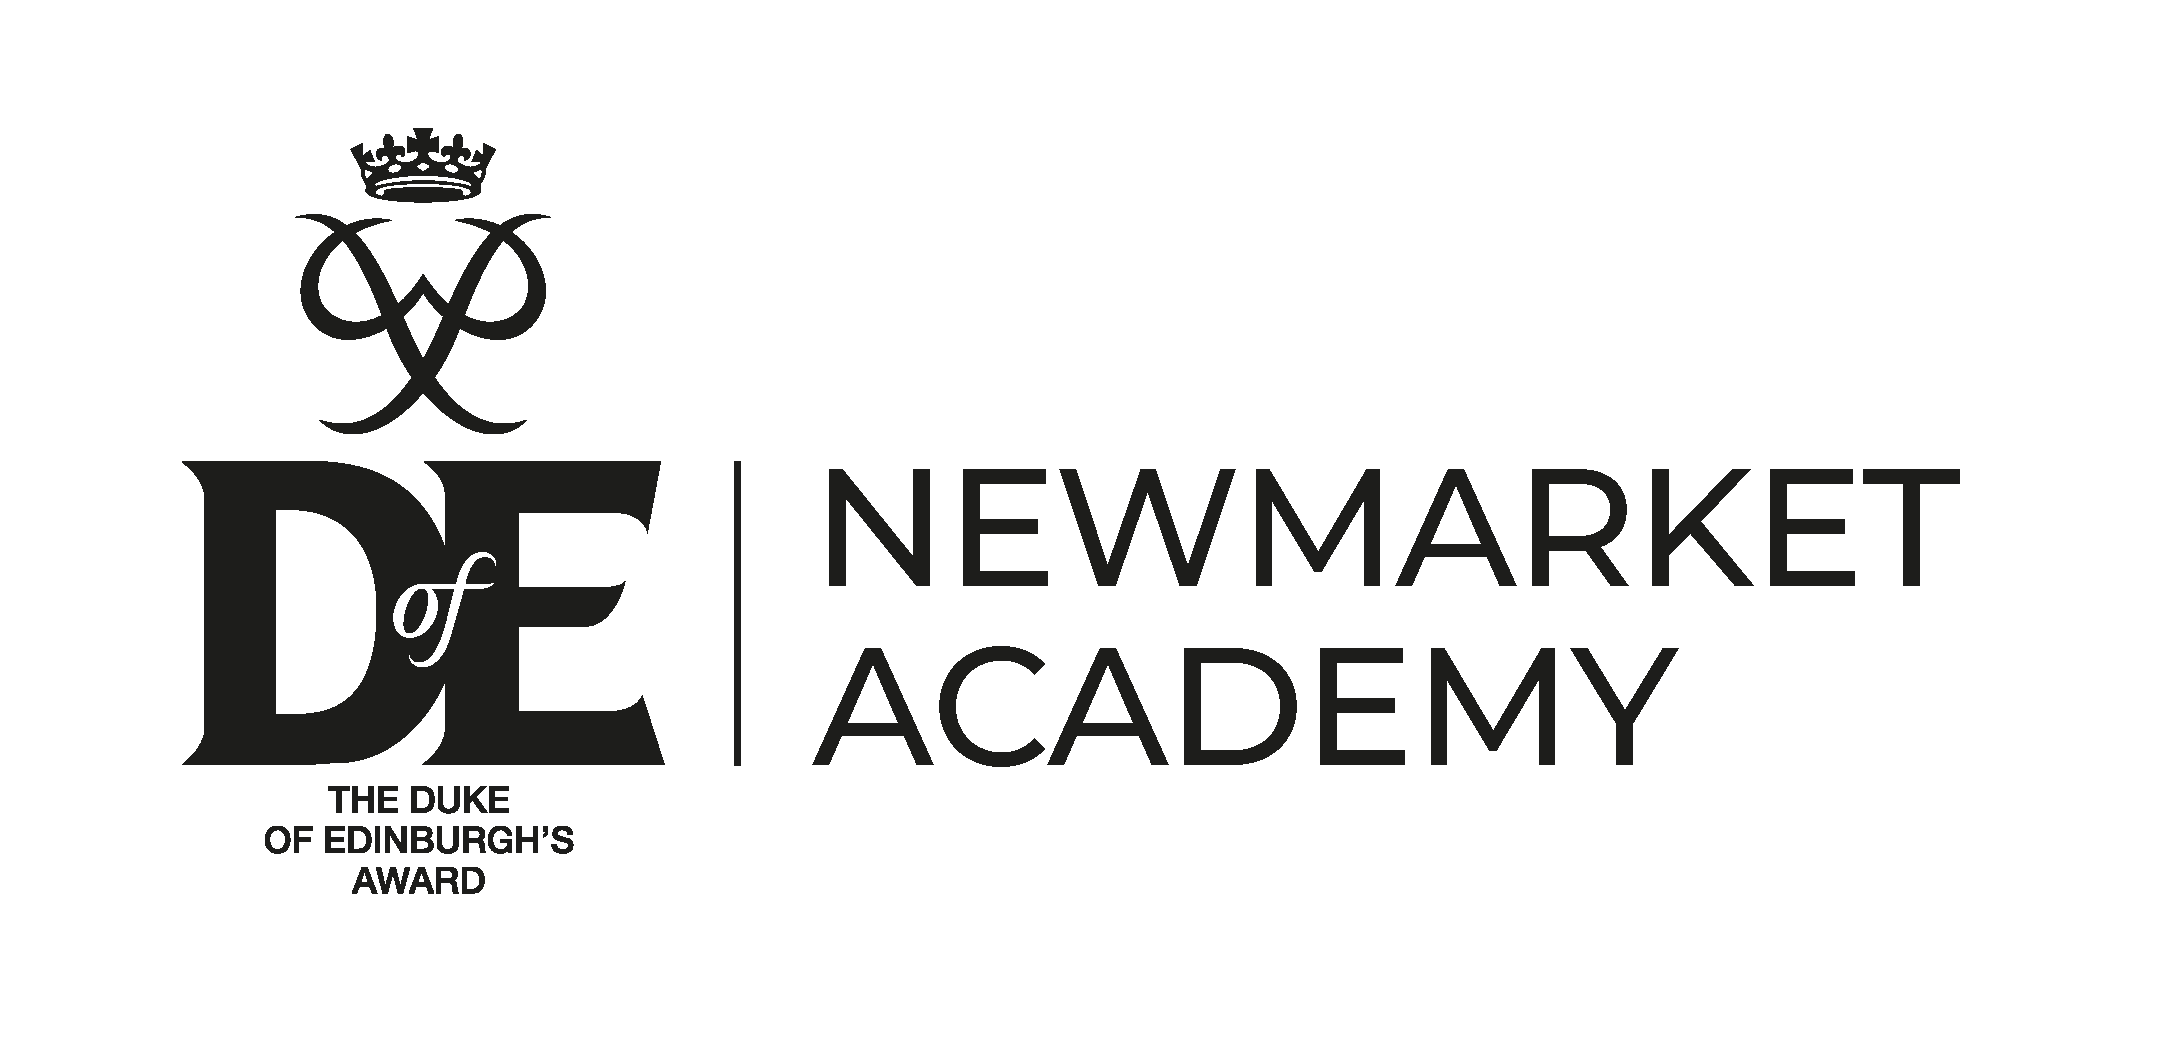 DofE_Newmarket Academy_stacked logo